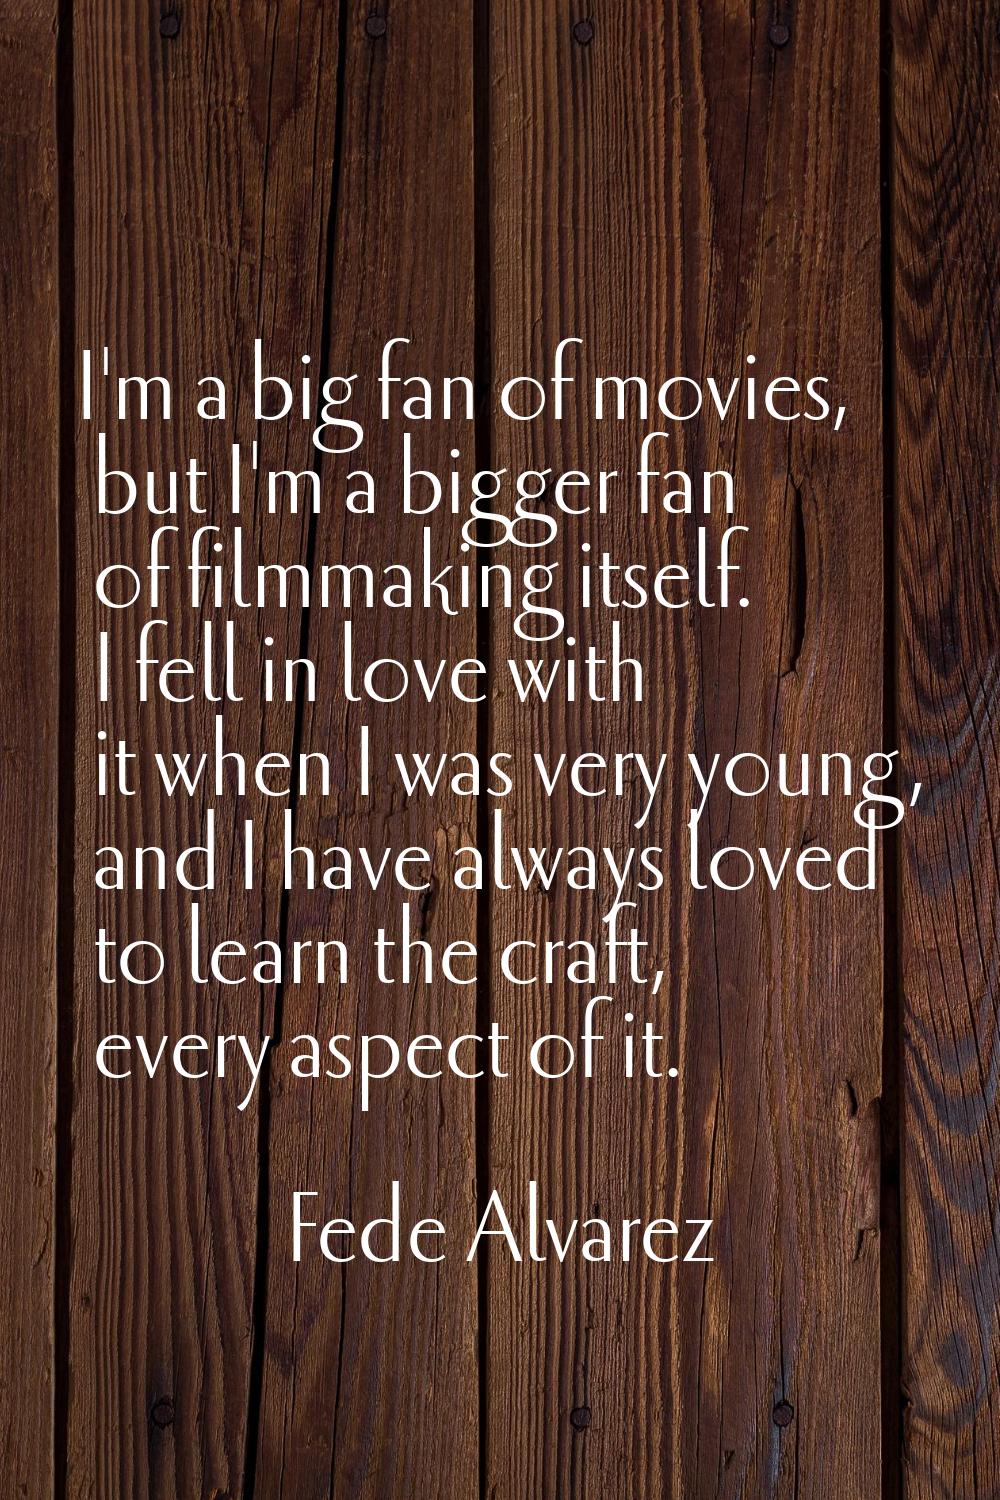 I'm a big fan of movies, but I'm a bigger fan of filmmaking itself. I fell in love with it when I w